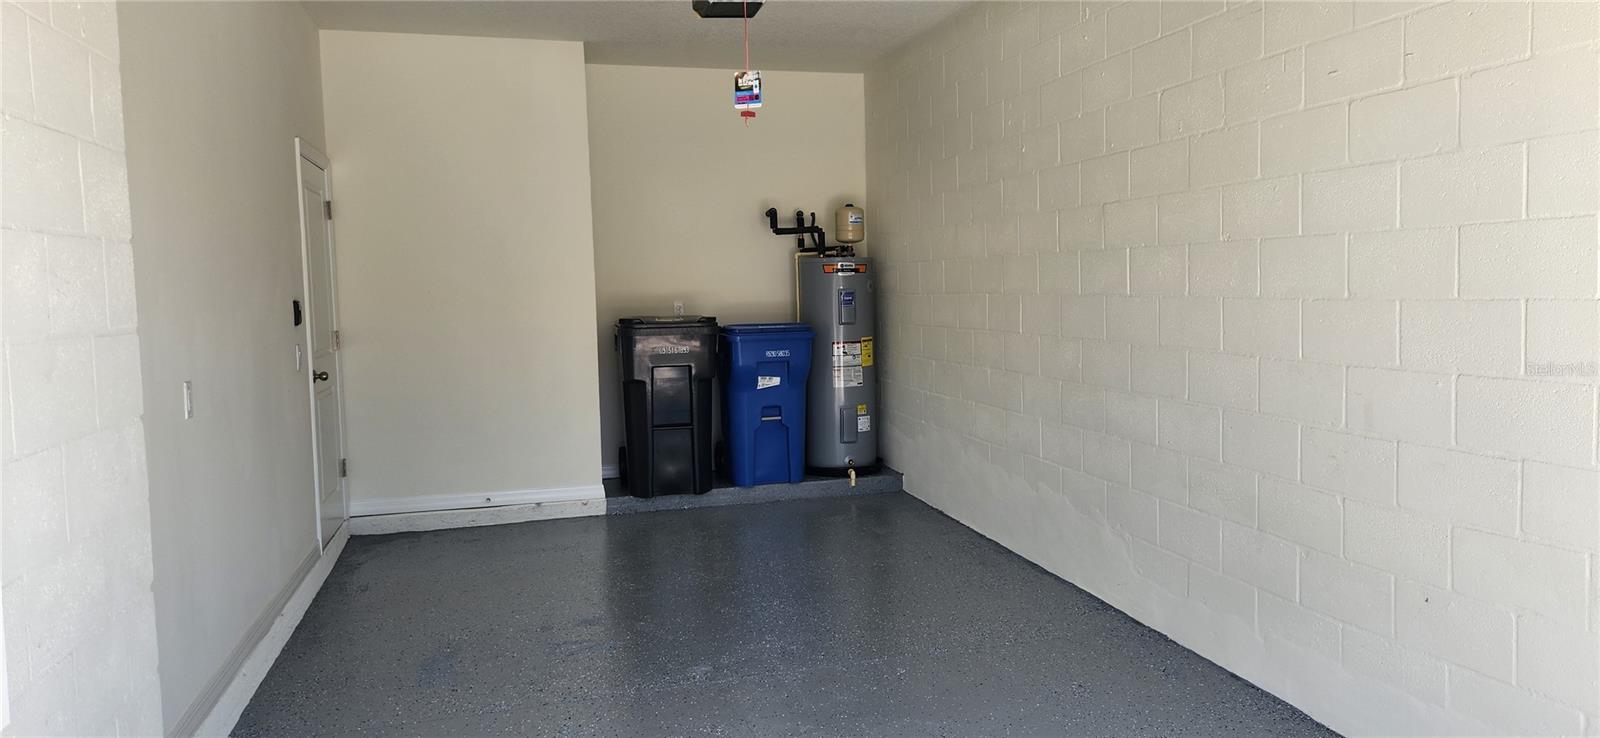 Garage with finished epoxy floor